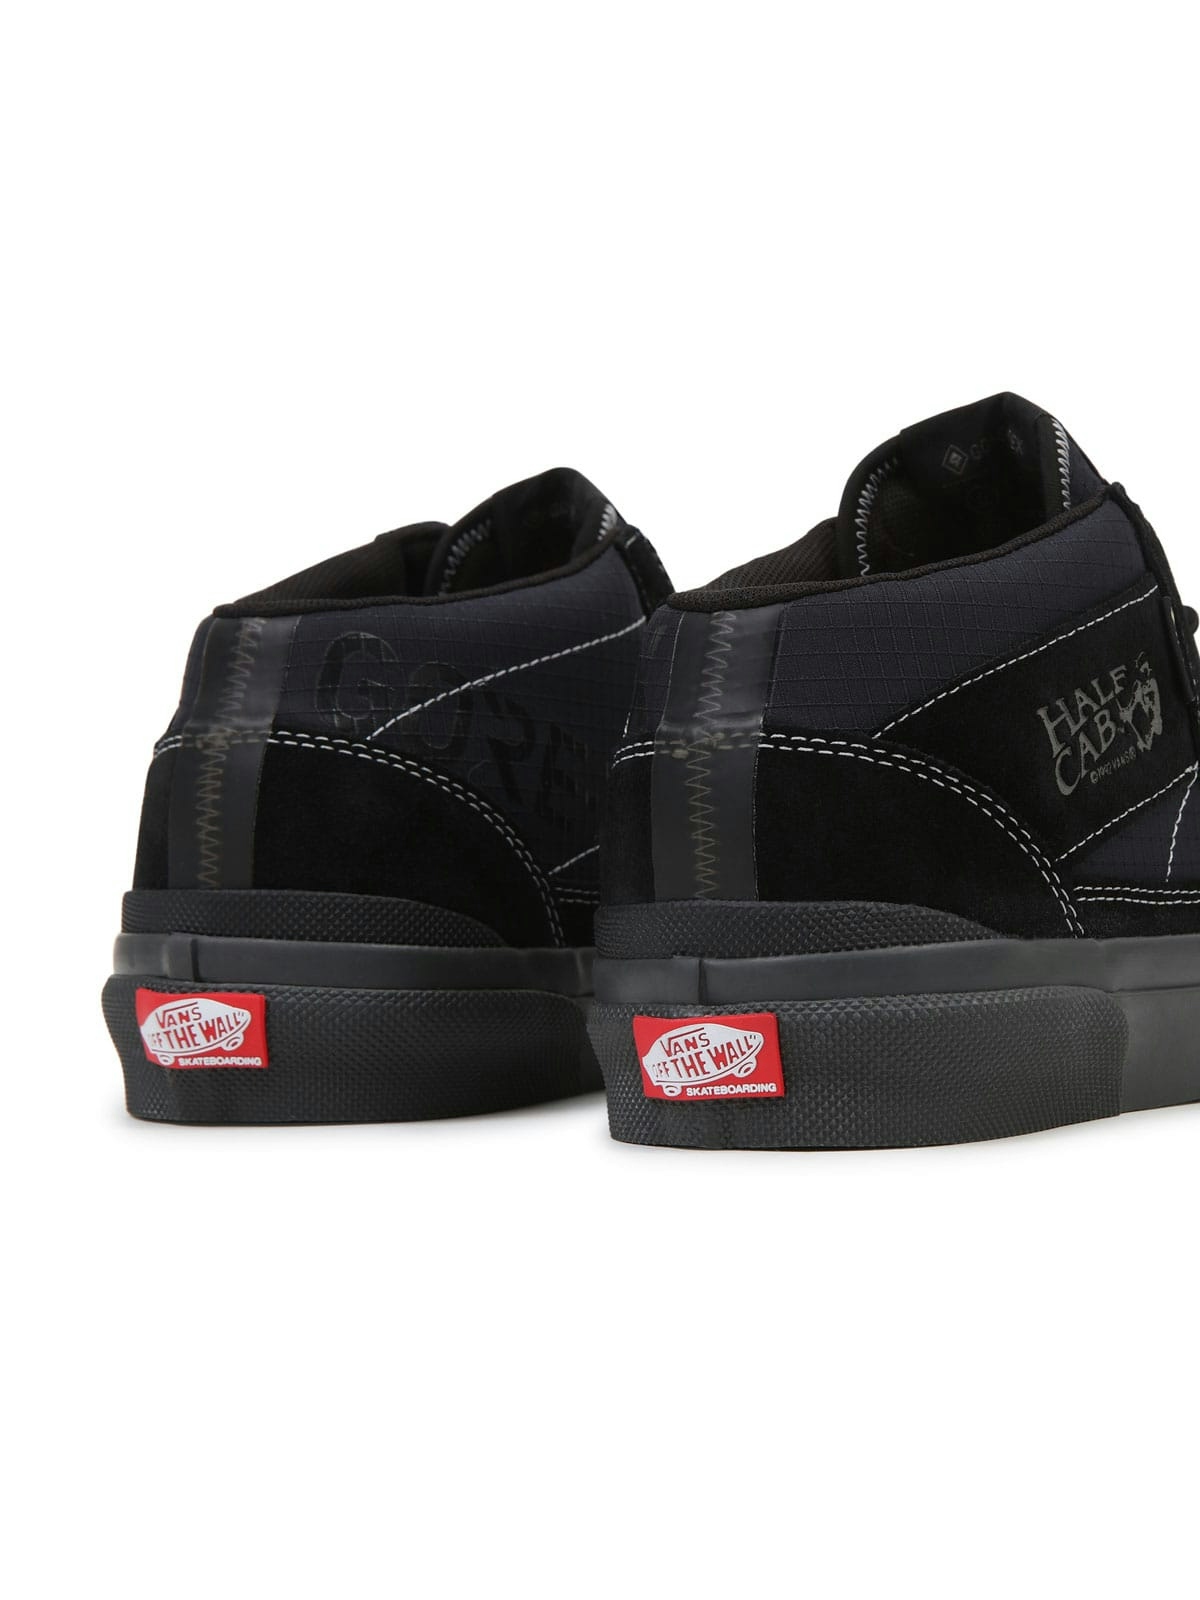 Vans Skate Half Cab '92 GORE-TEX Shoes Black 5